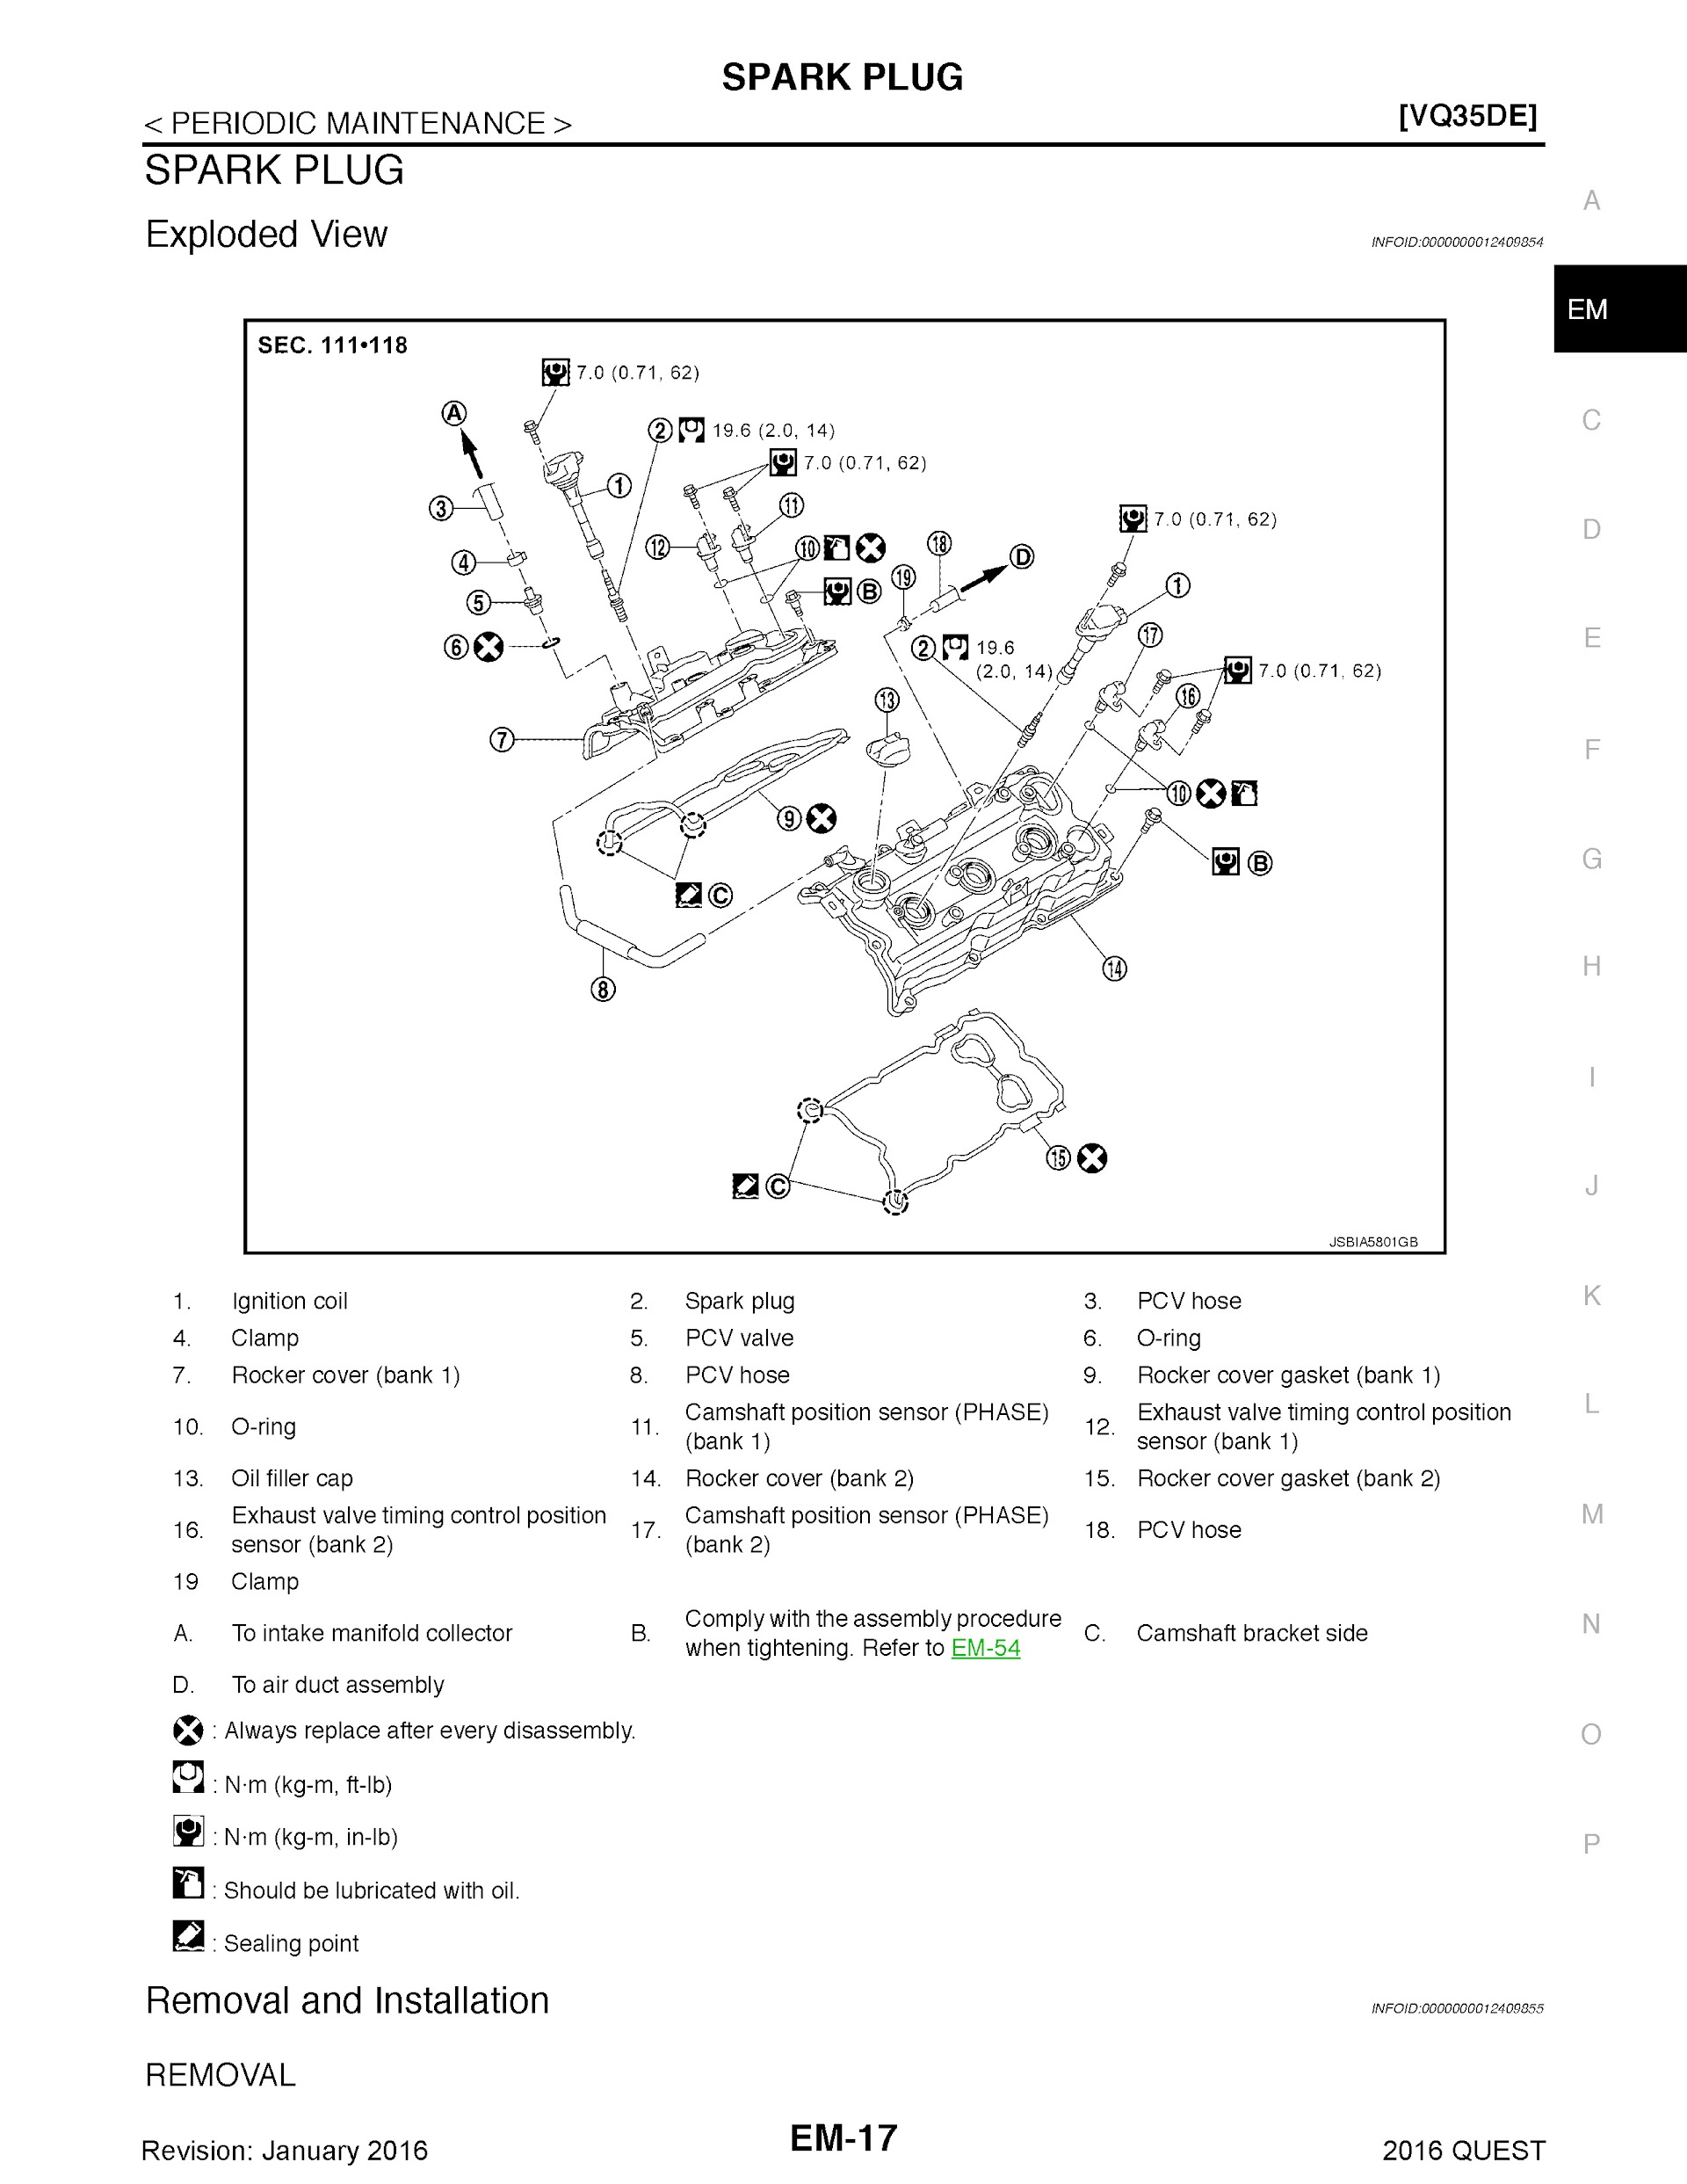 2016 Nissan Quest Repair Manual,, Spark Plug, Periodic Maintenance